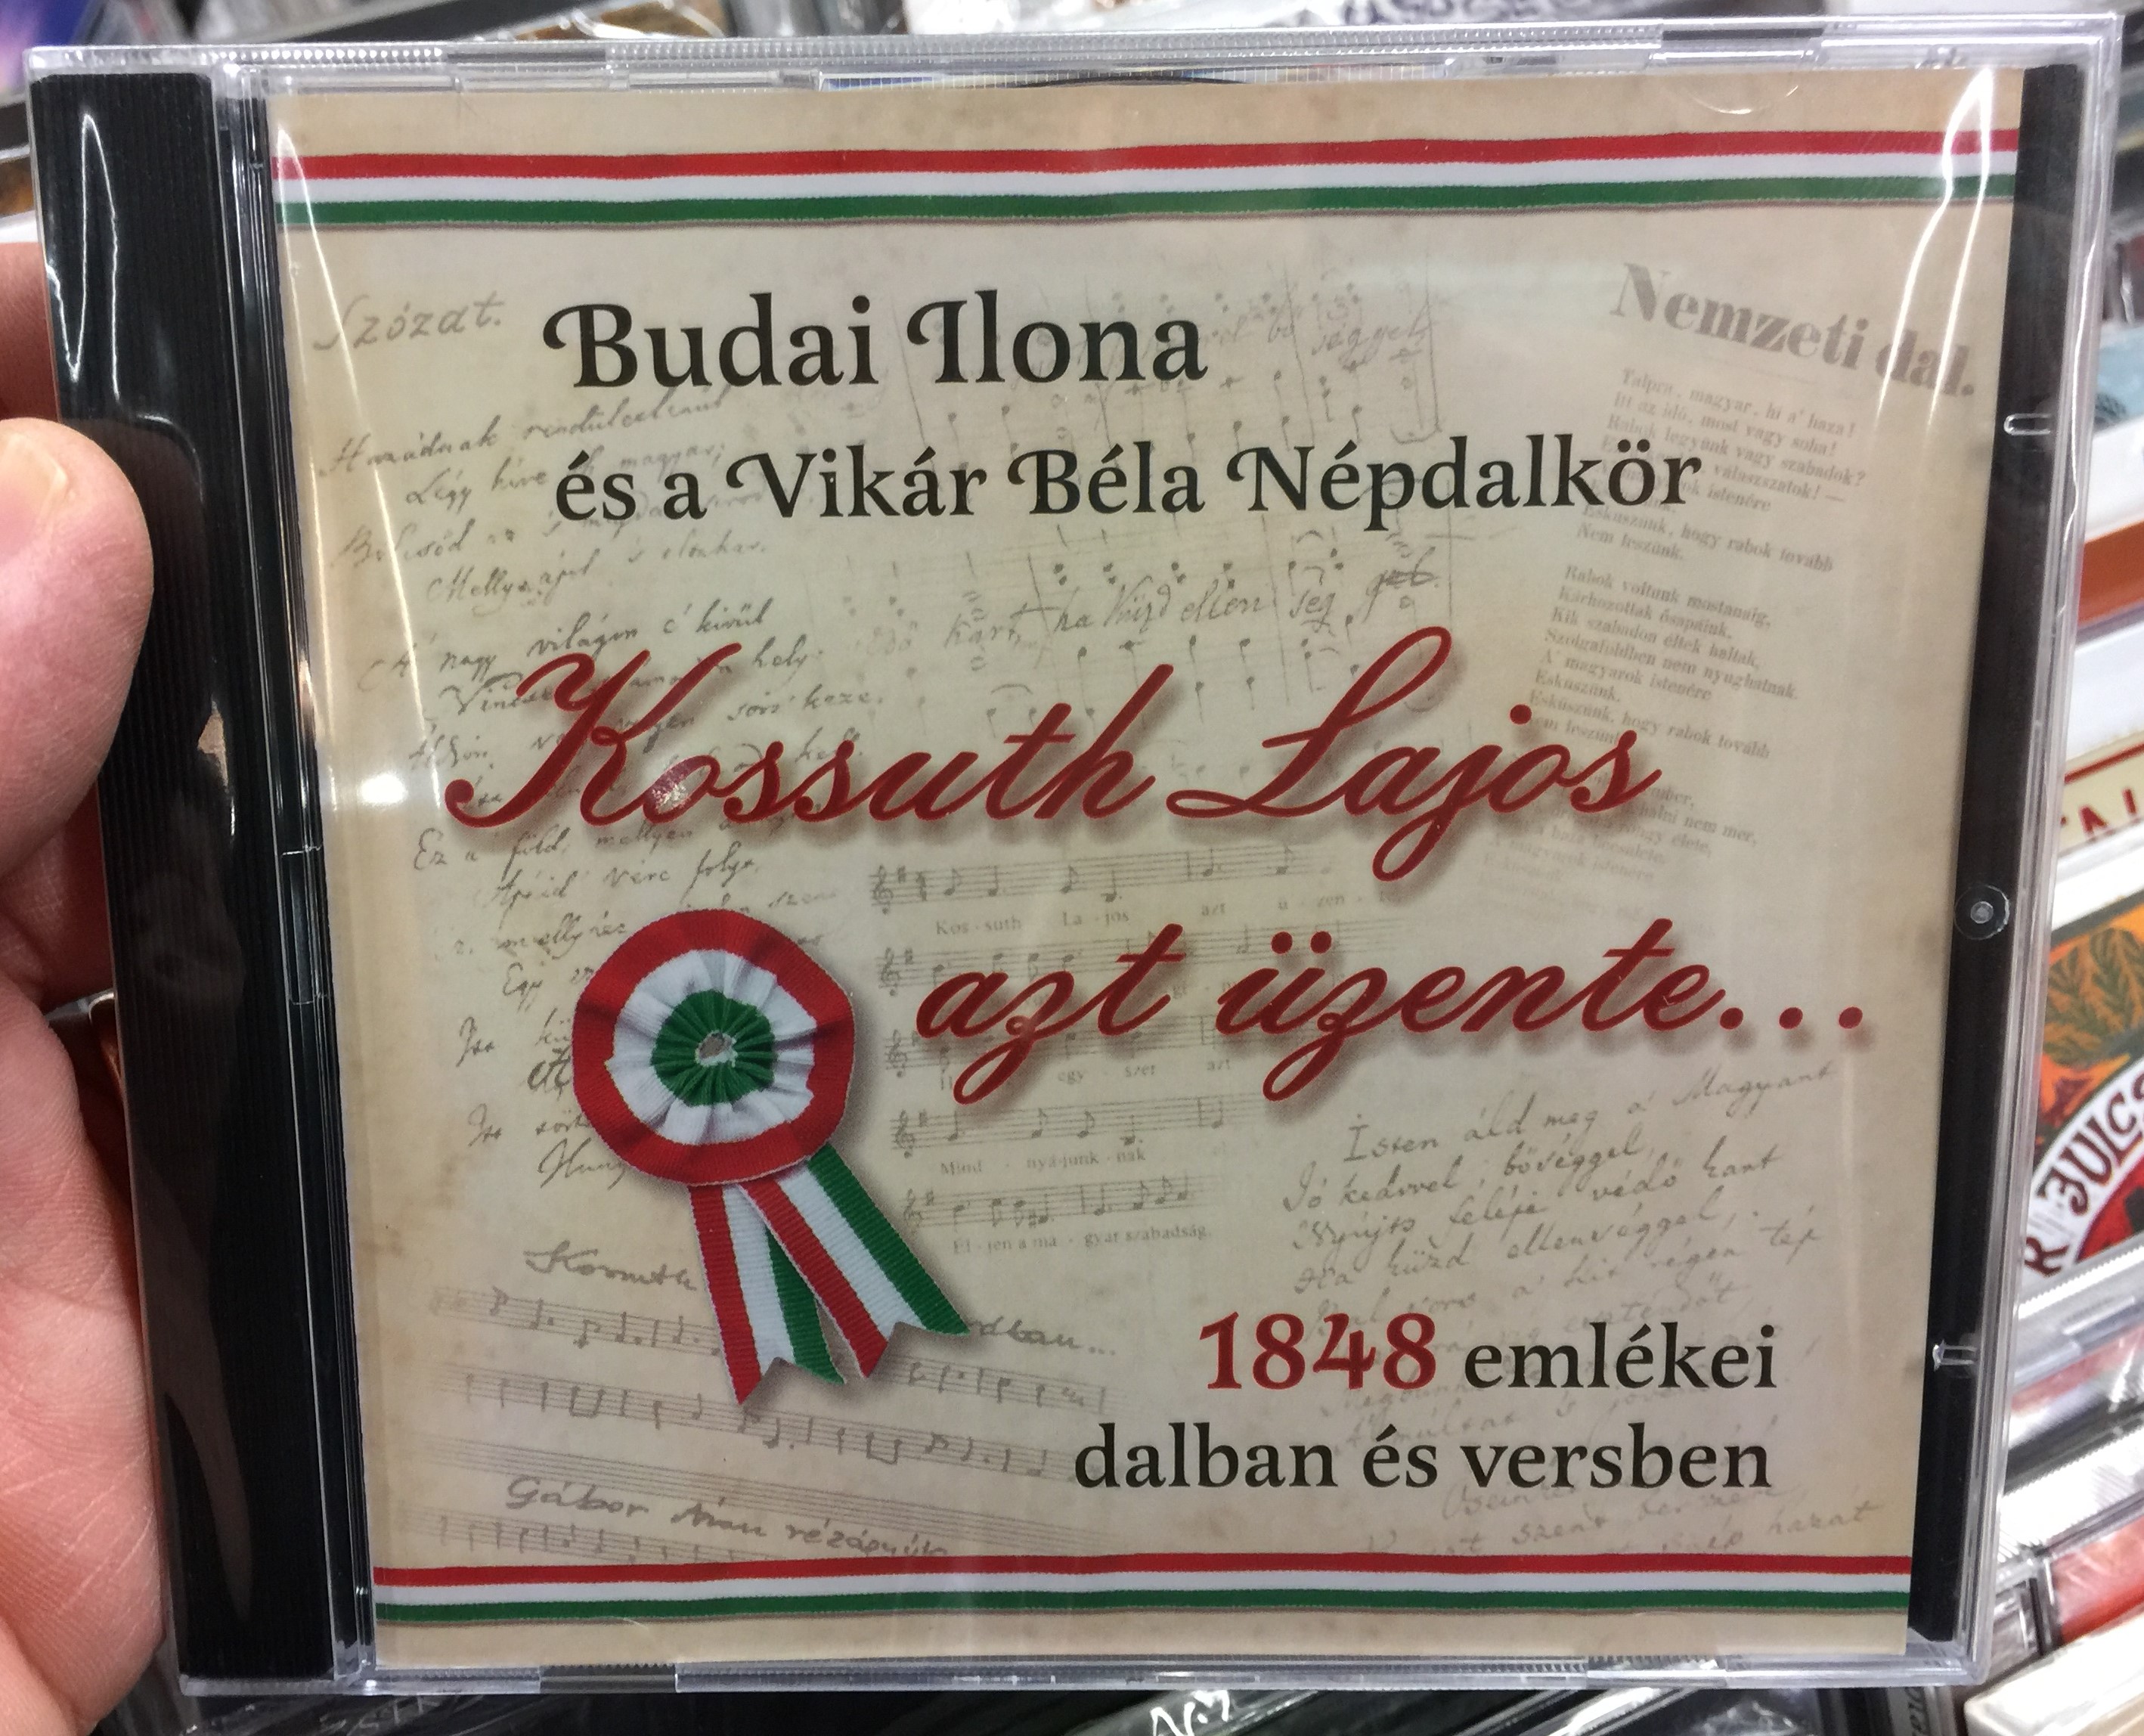 budai-ilona-es-a-vikar-bela-nepdalkor-kossuth-lajos-azt-uzente...-1848-emlekei-dalban-es-versben-etnofon-hangst-di-audio-cd-5999538425810-1-.jpg